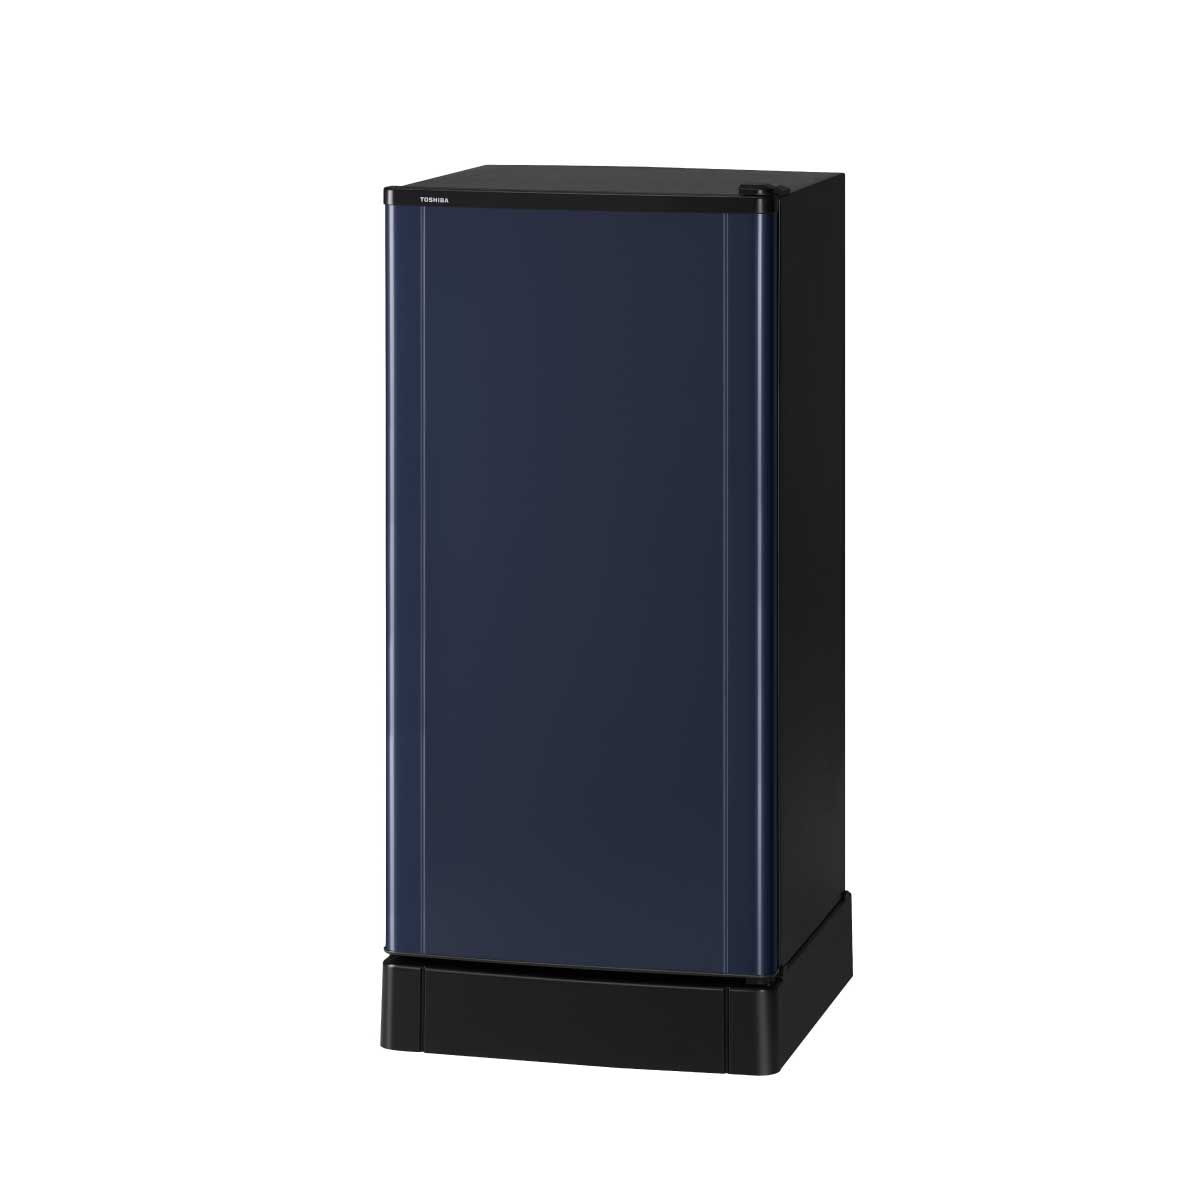 TOSHIBA ตู้เย็น 1 ประตู 6.4Q สีน้ำเงิน  รุ่น GR-D187